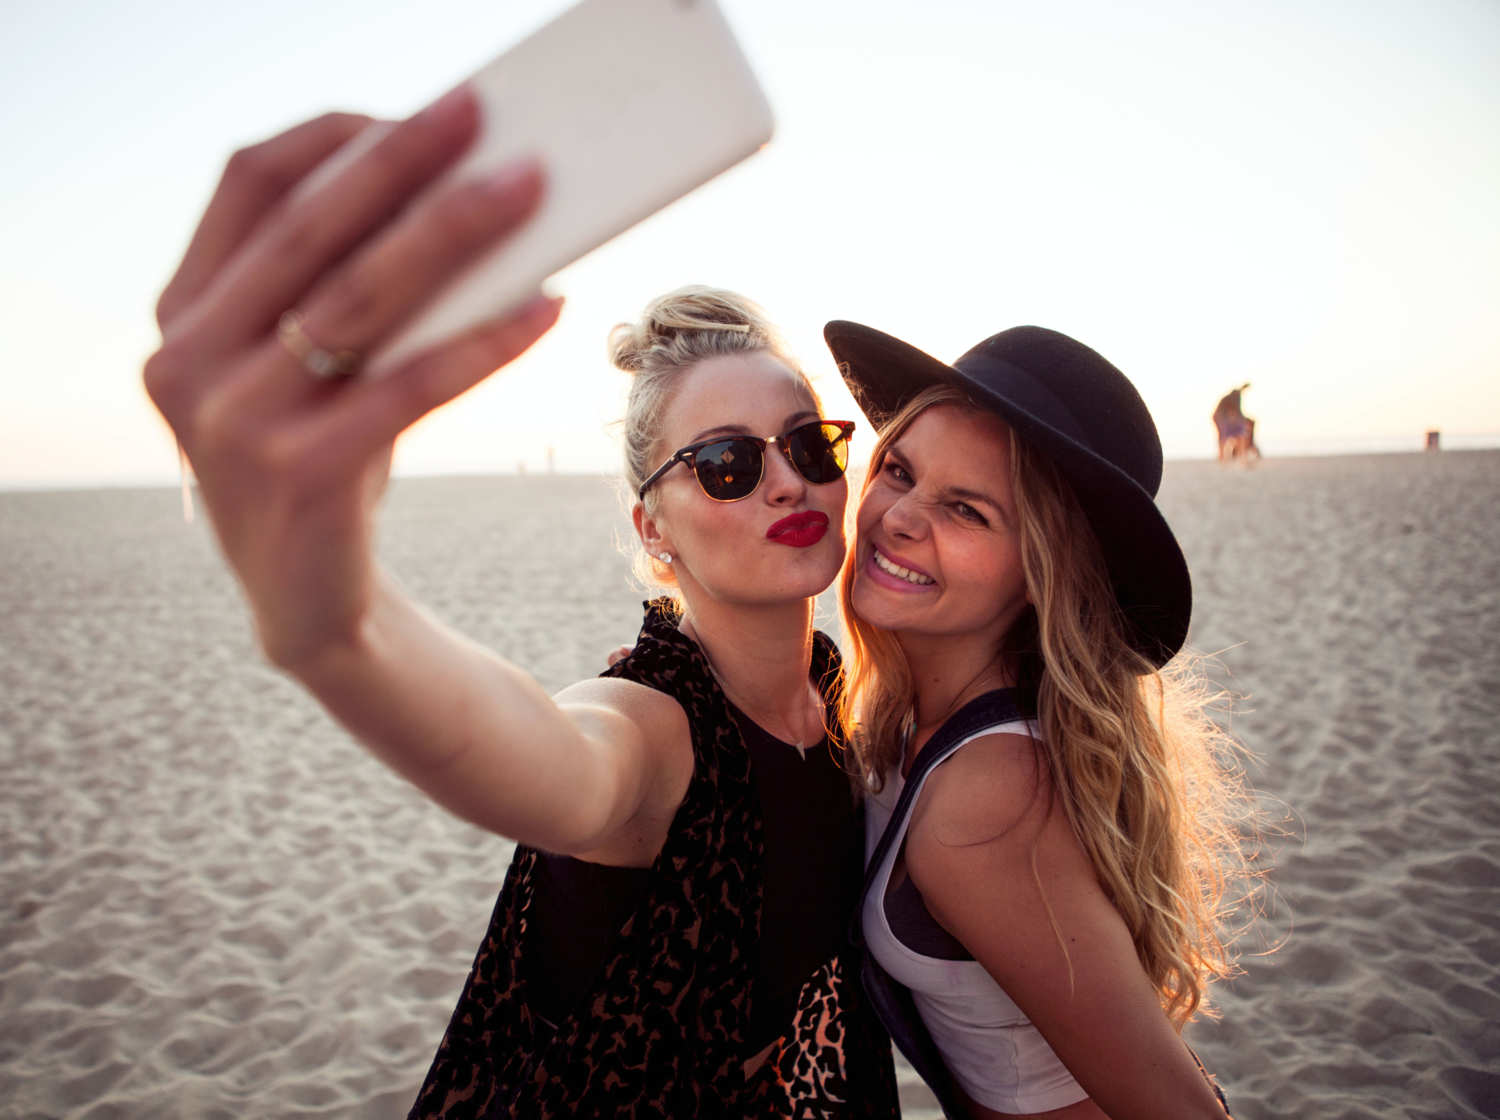  selfie και φανερώνουν την σύγχρονη «Λατρεία του Εγώ»